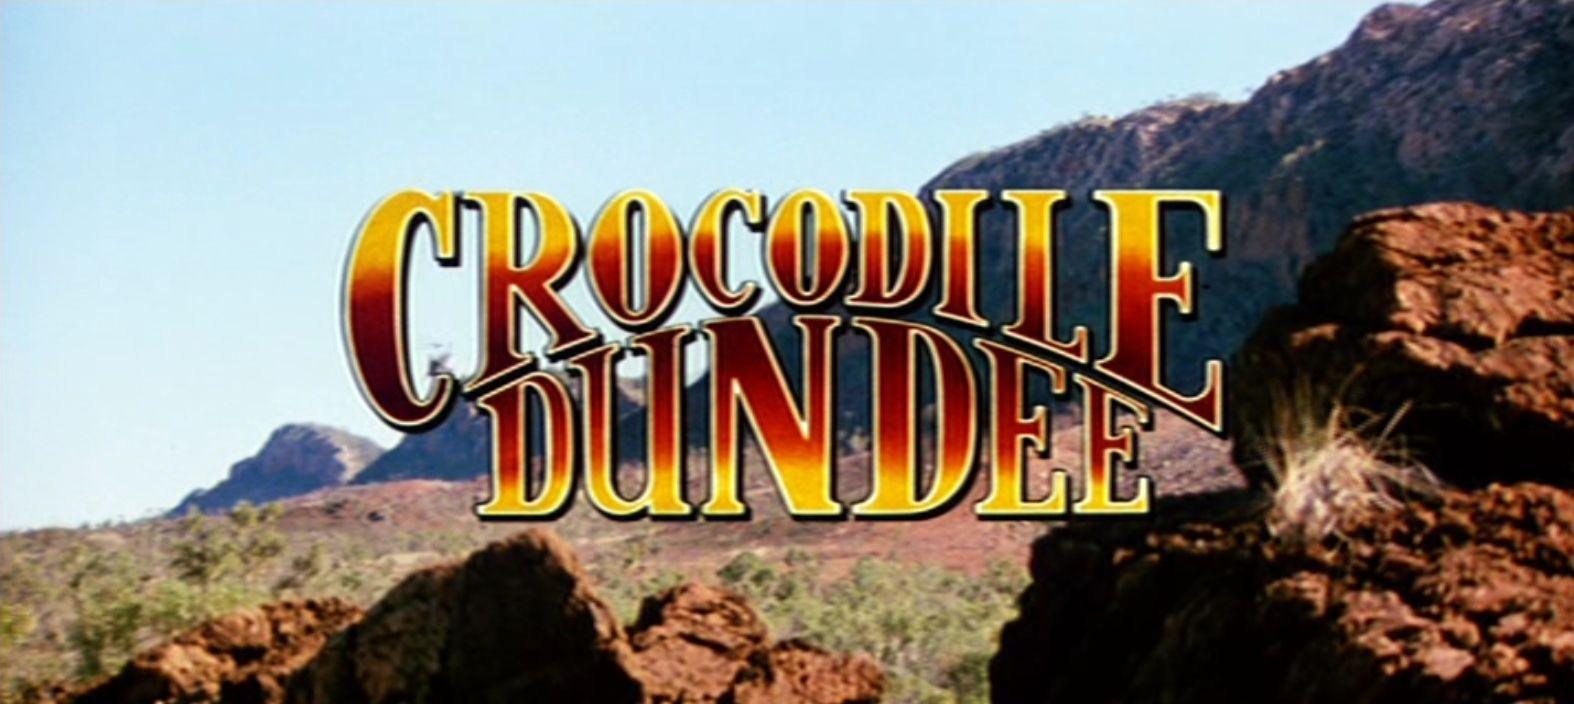 Crocodile Dundee Logo - Crocodile Dundee